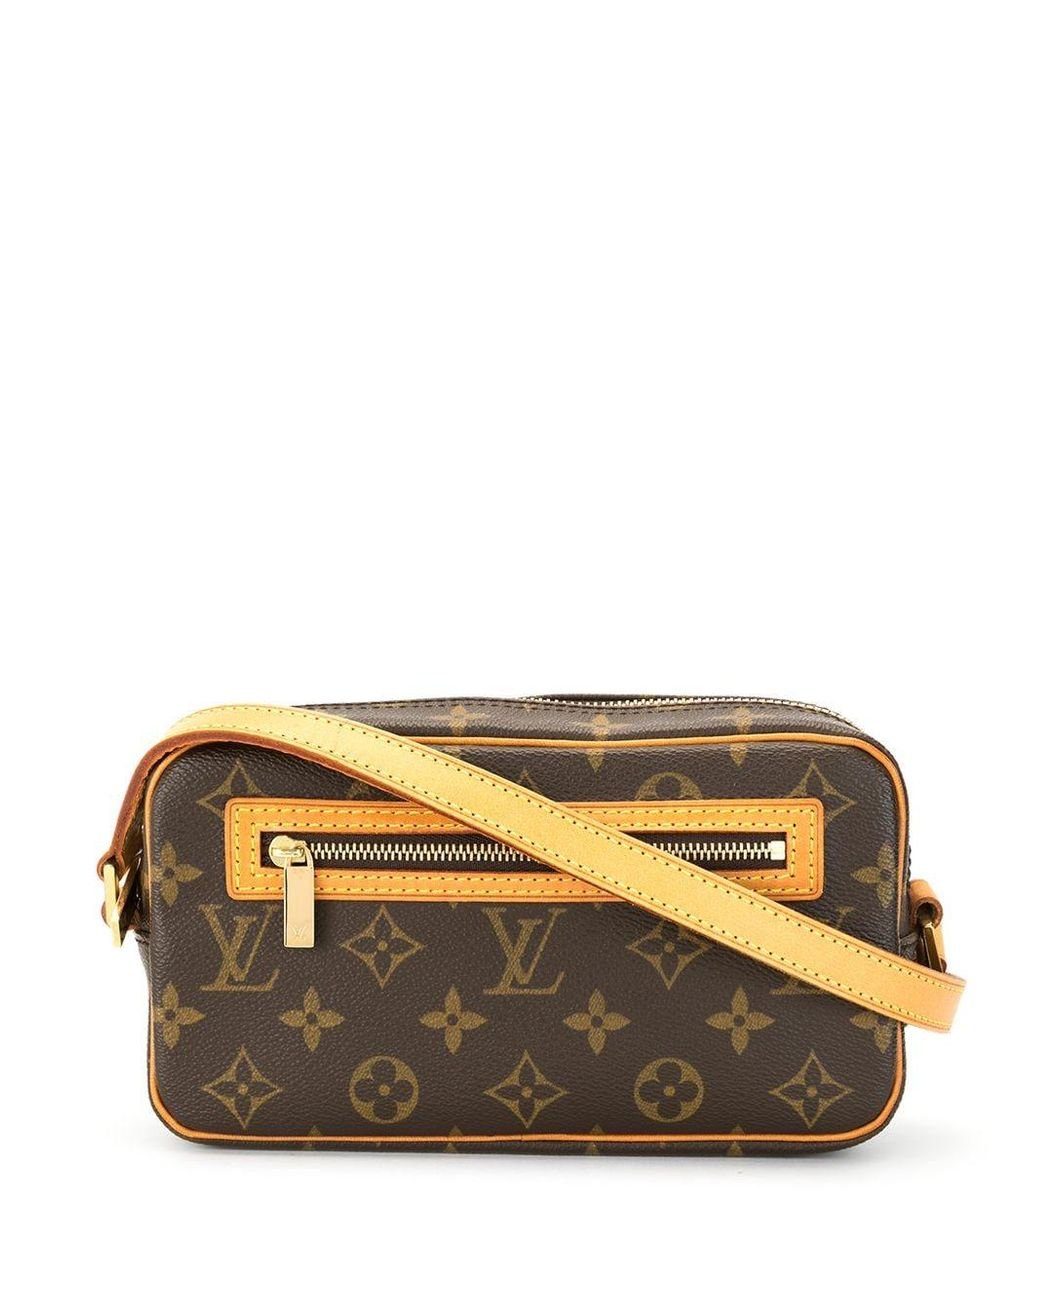 Louis+Vuitton+Multipli+Cite+Shoulder+Bag+Brown+Leather for sale online